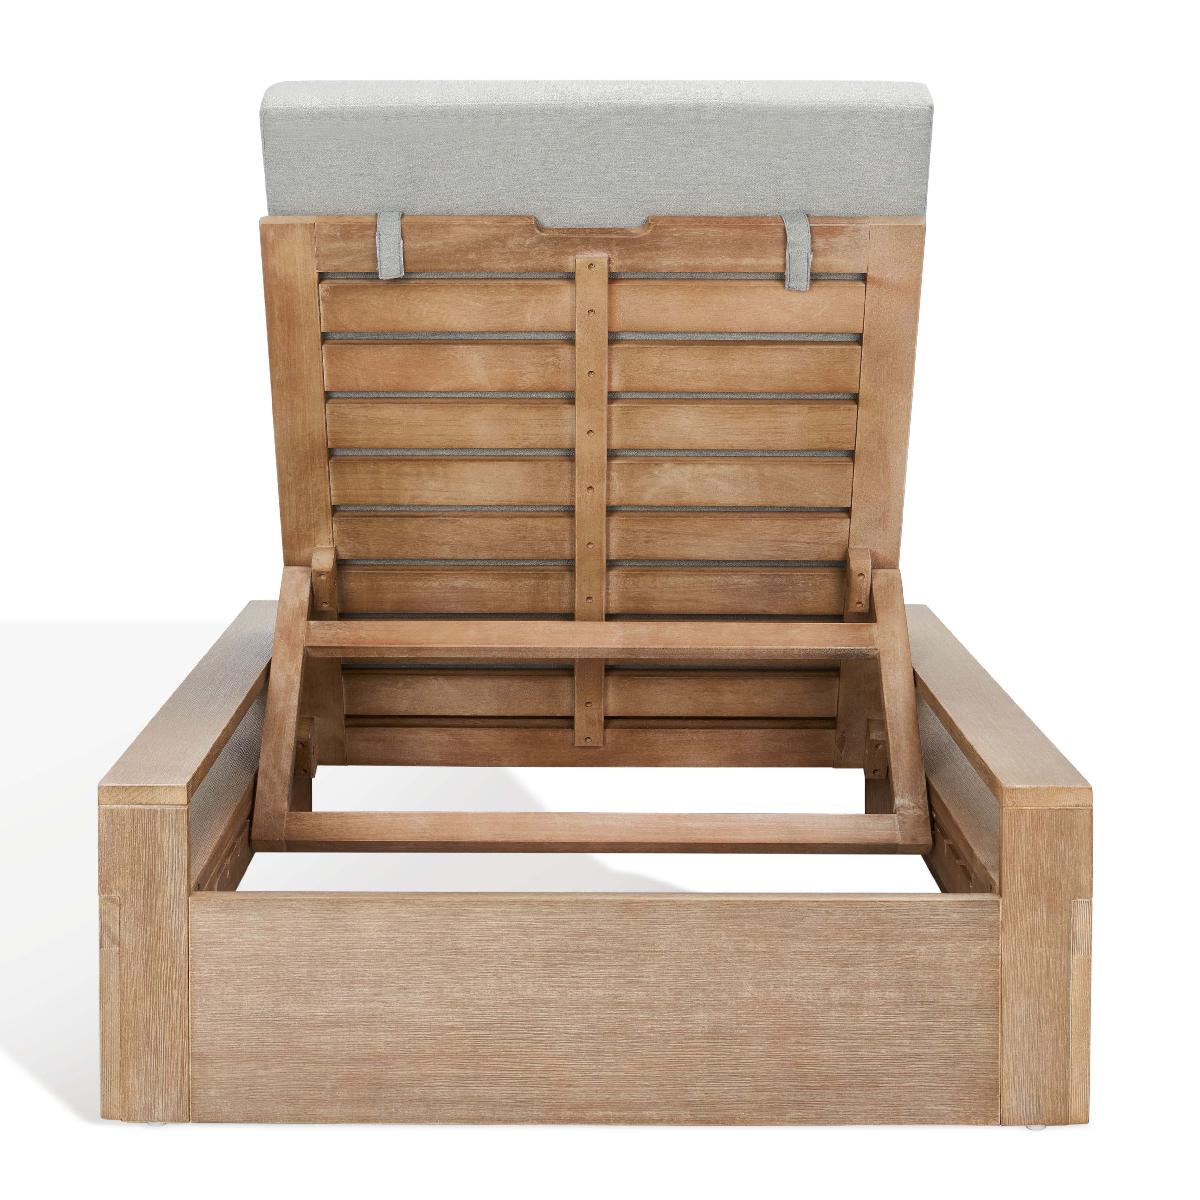 Safavieh Couture Lanai Wood Chaise Lounge Chair